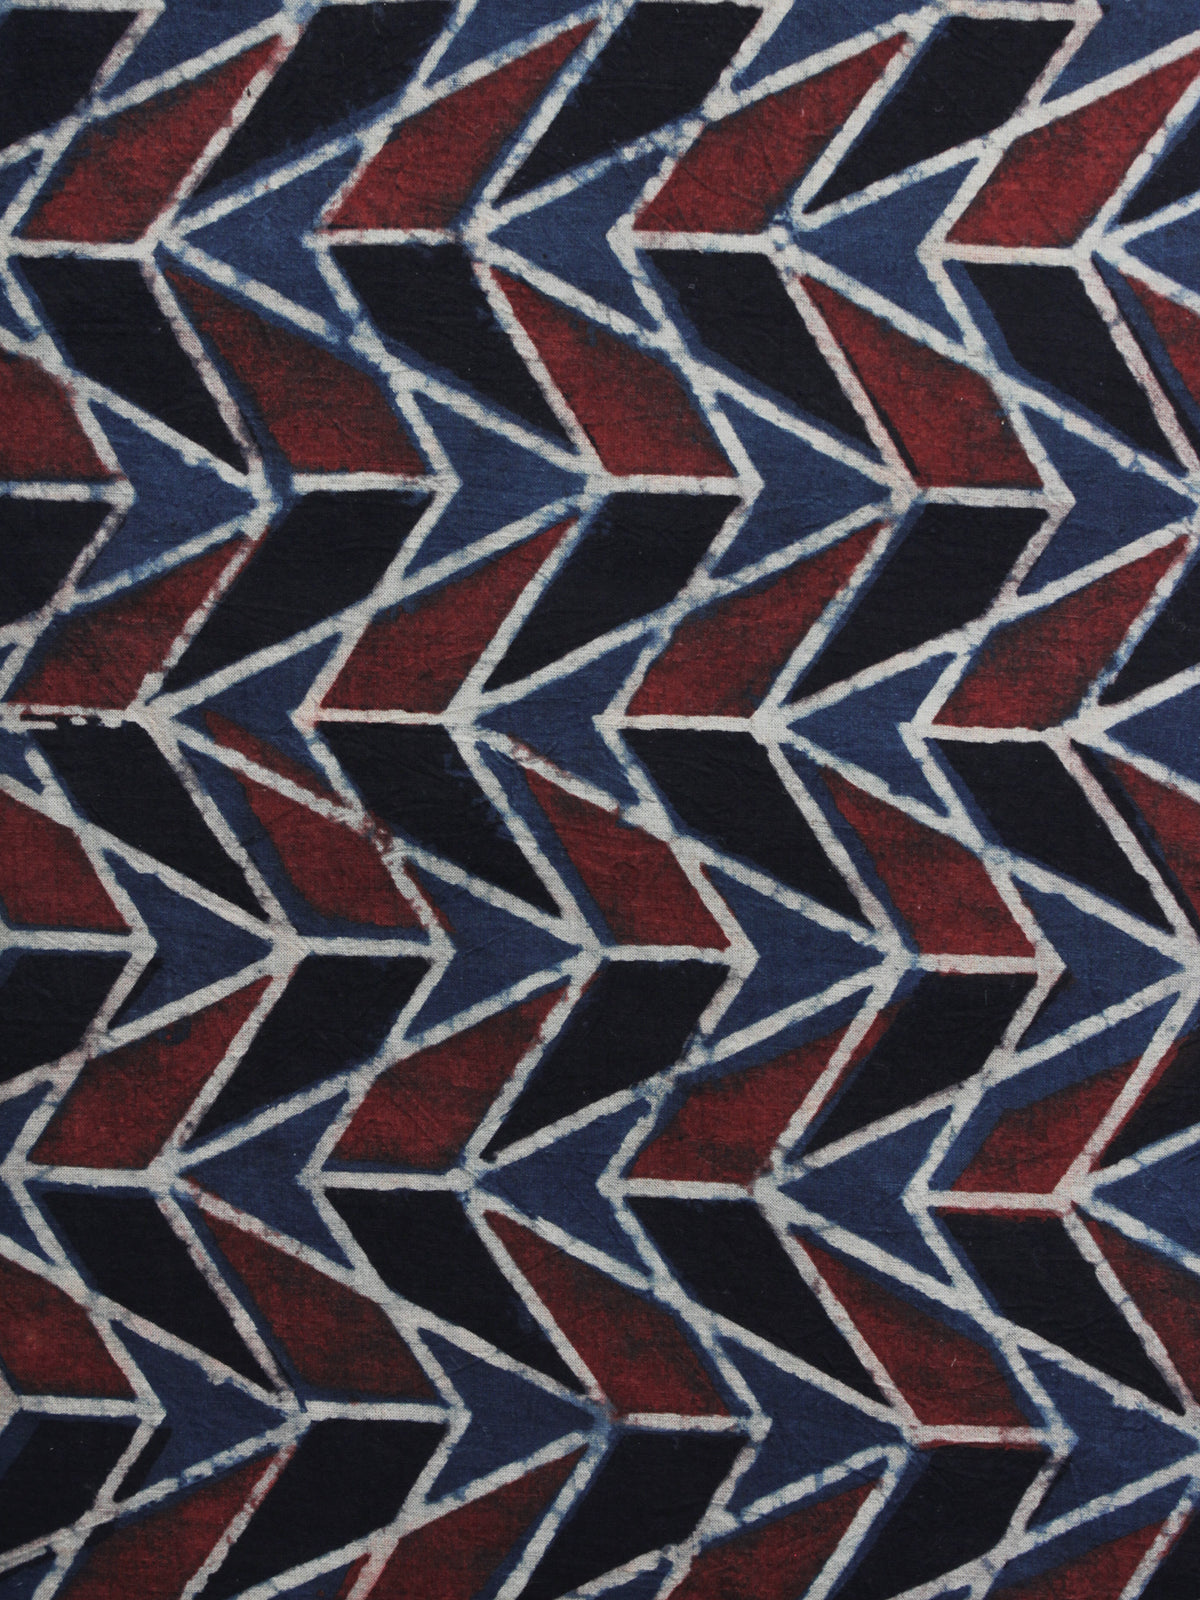 Blue Black Maroon Ajrakh Printed Cotton Fabric Per Meter - F003F1171